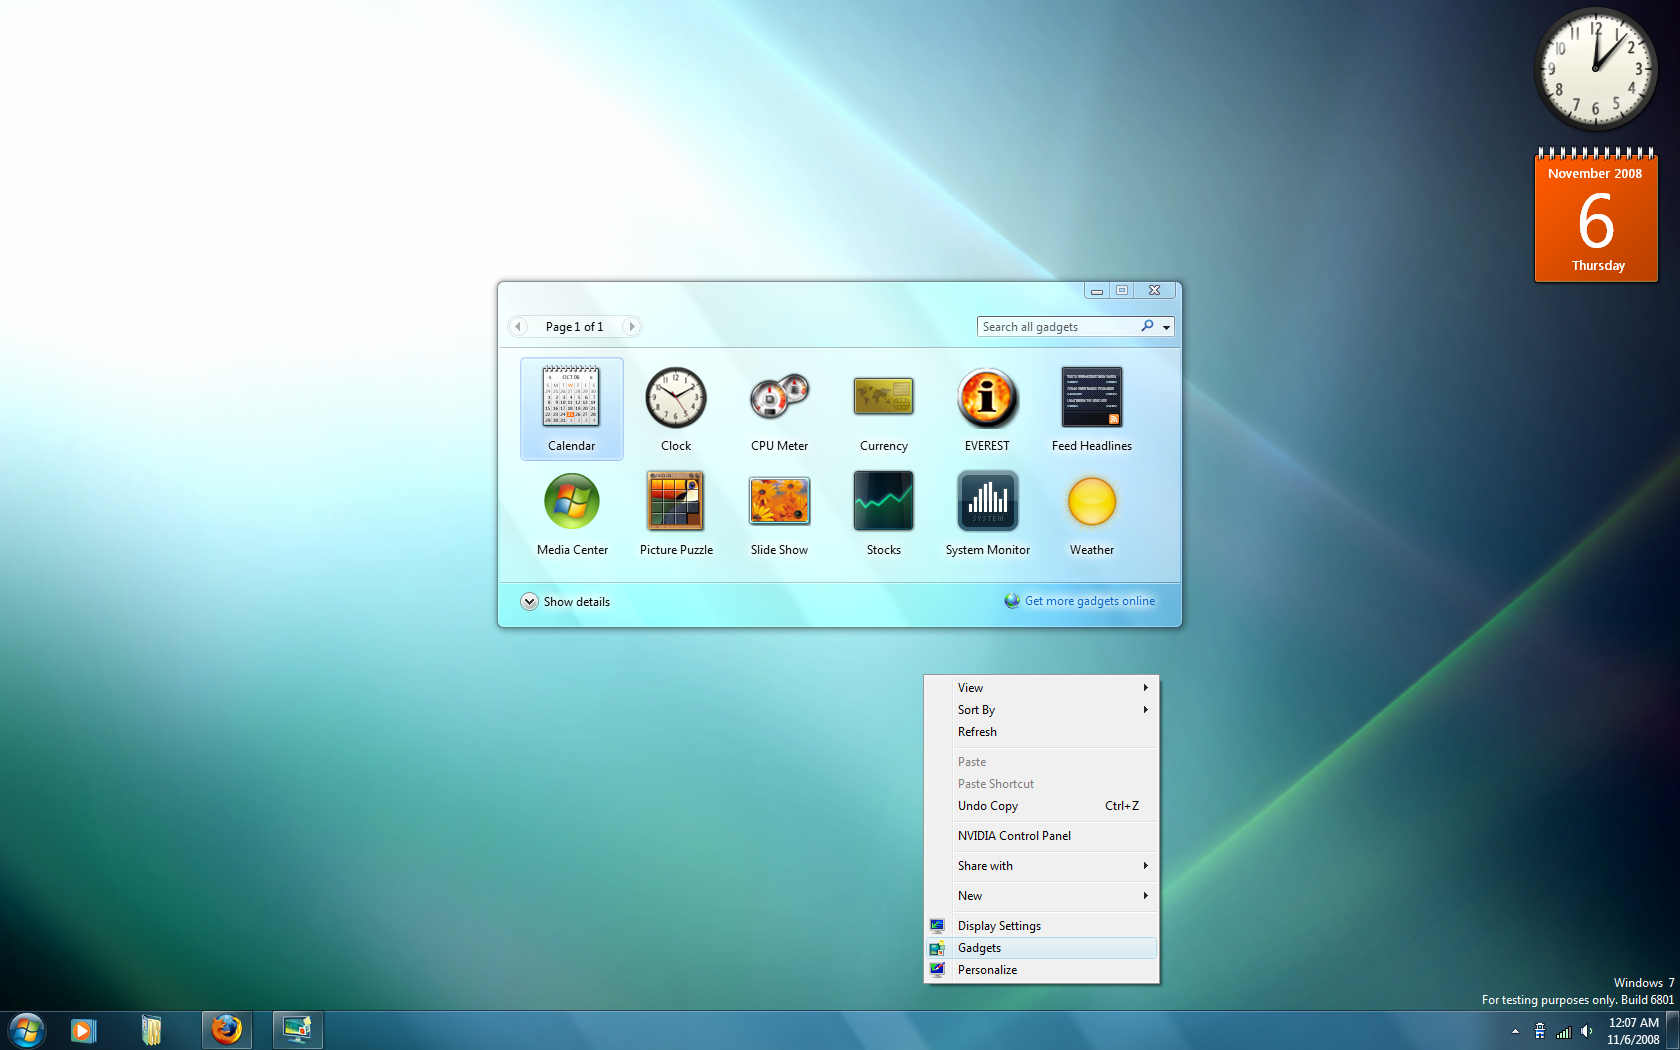 screenshots of windows 7